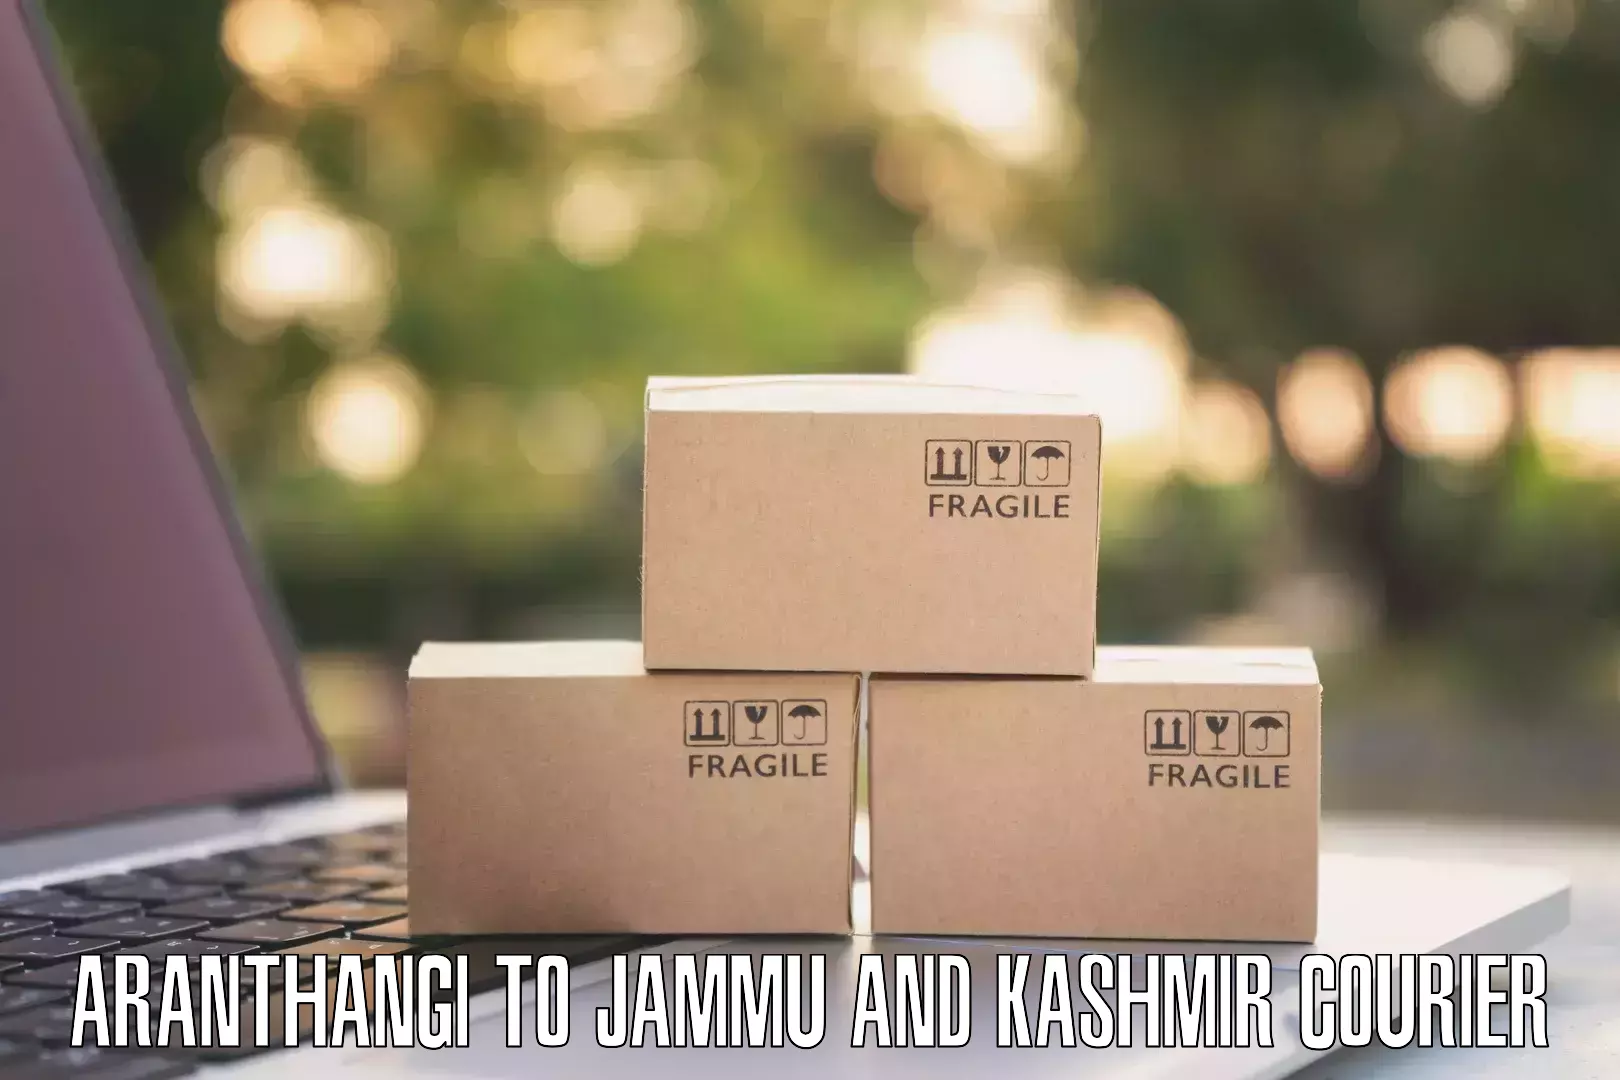 Next-day freight services Aranthangi to Jammu and Kashmir